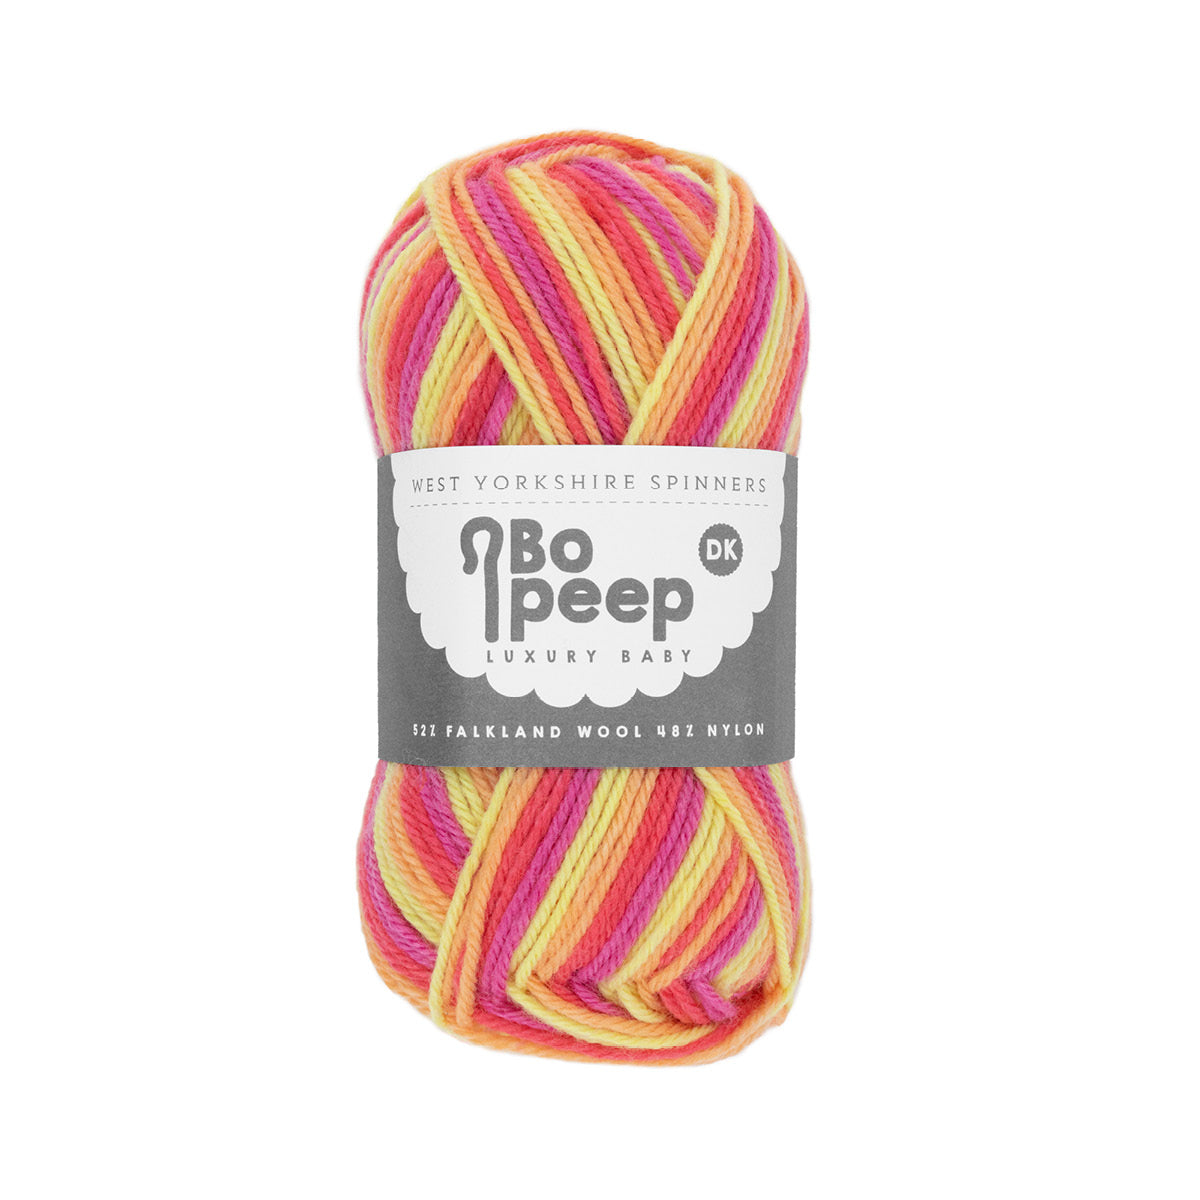 WYS West Yorkshire Spinners Bo Peep Luxury Baby DK yarn ball